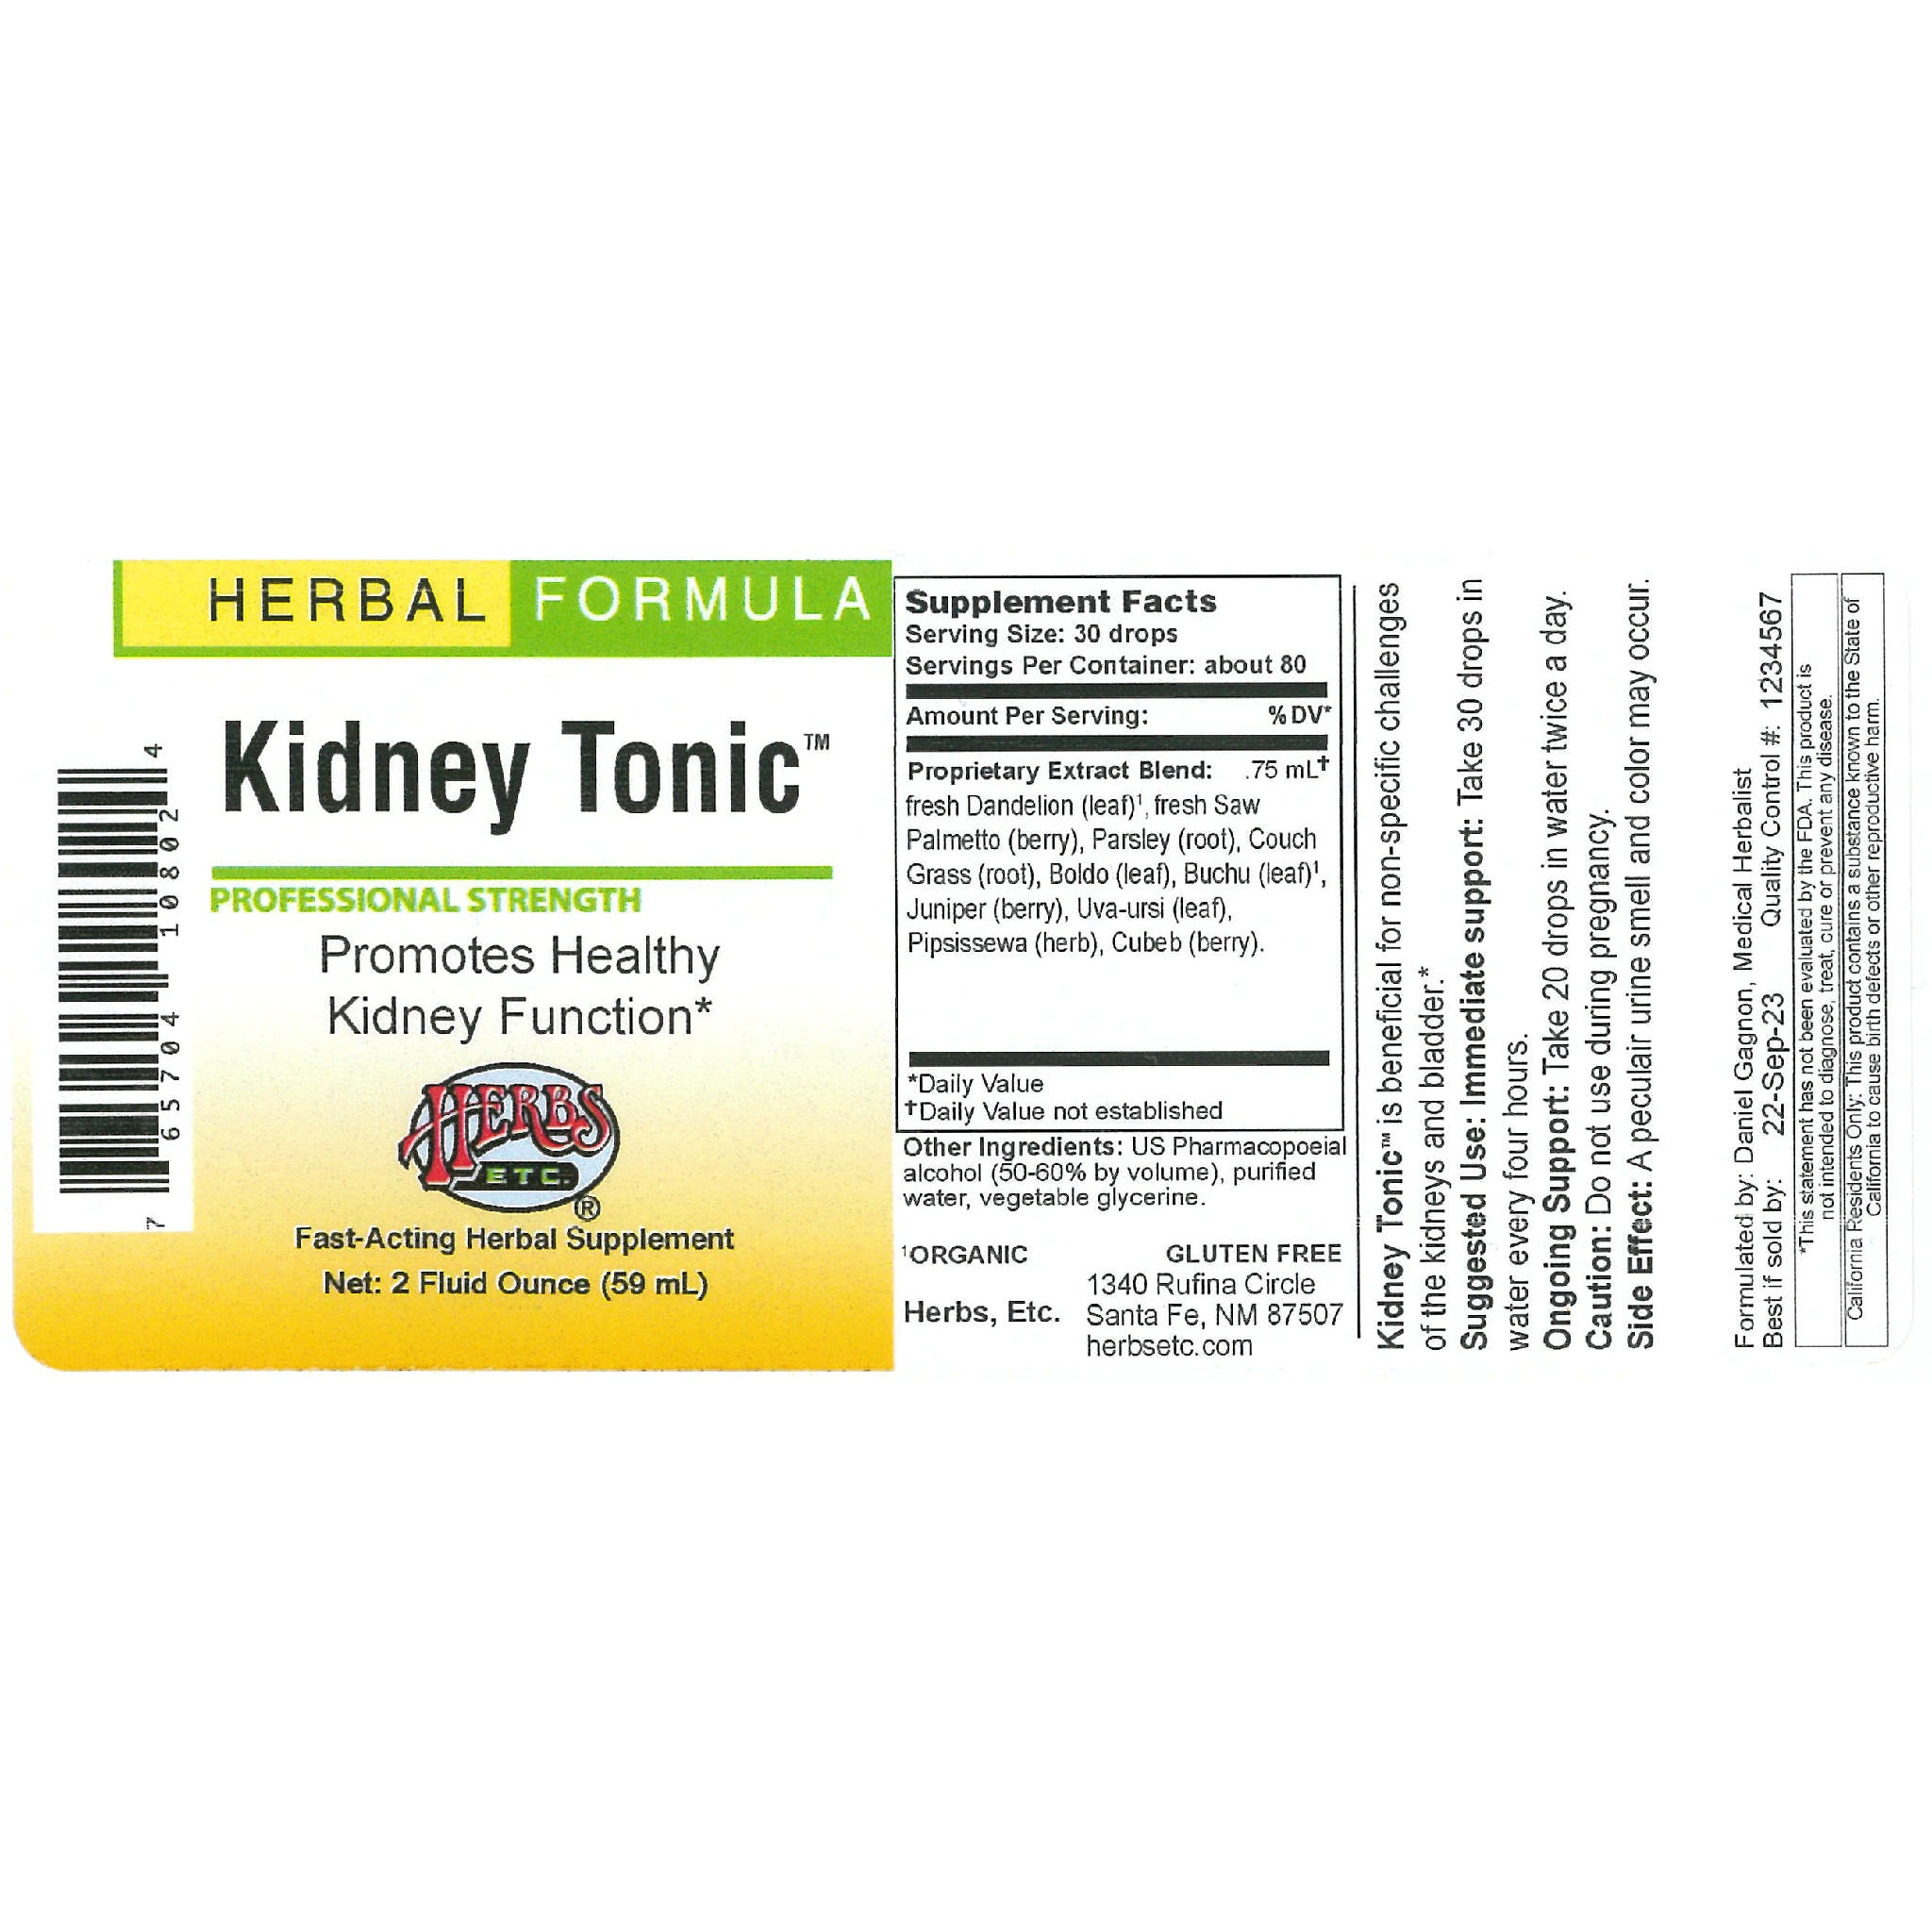 Herbs Etc - Kidney Tonic